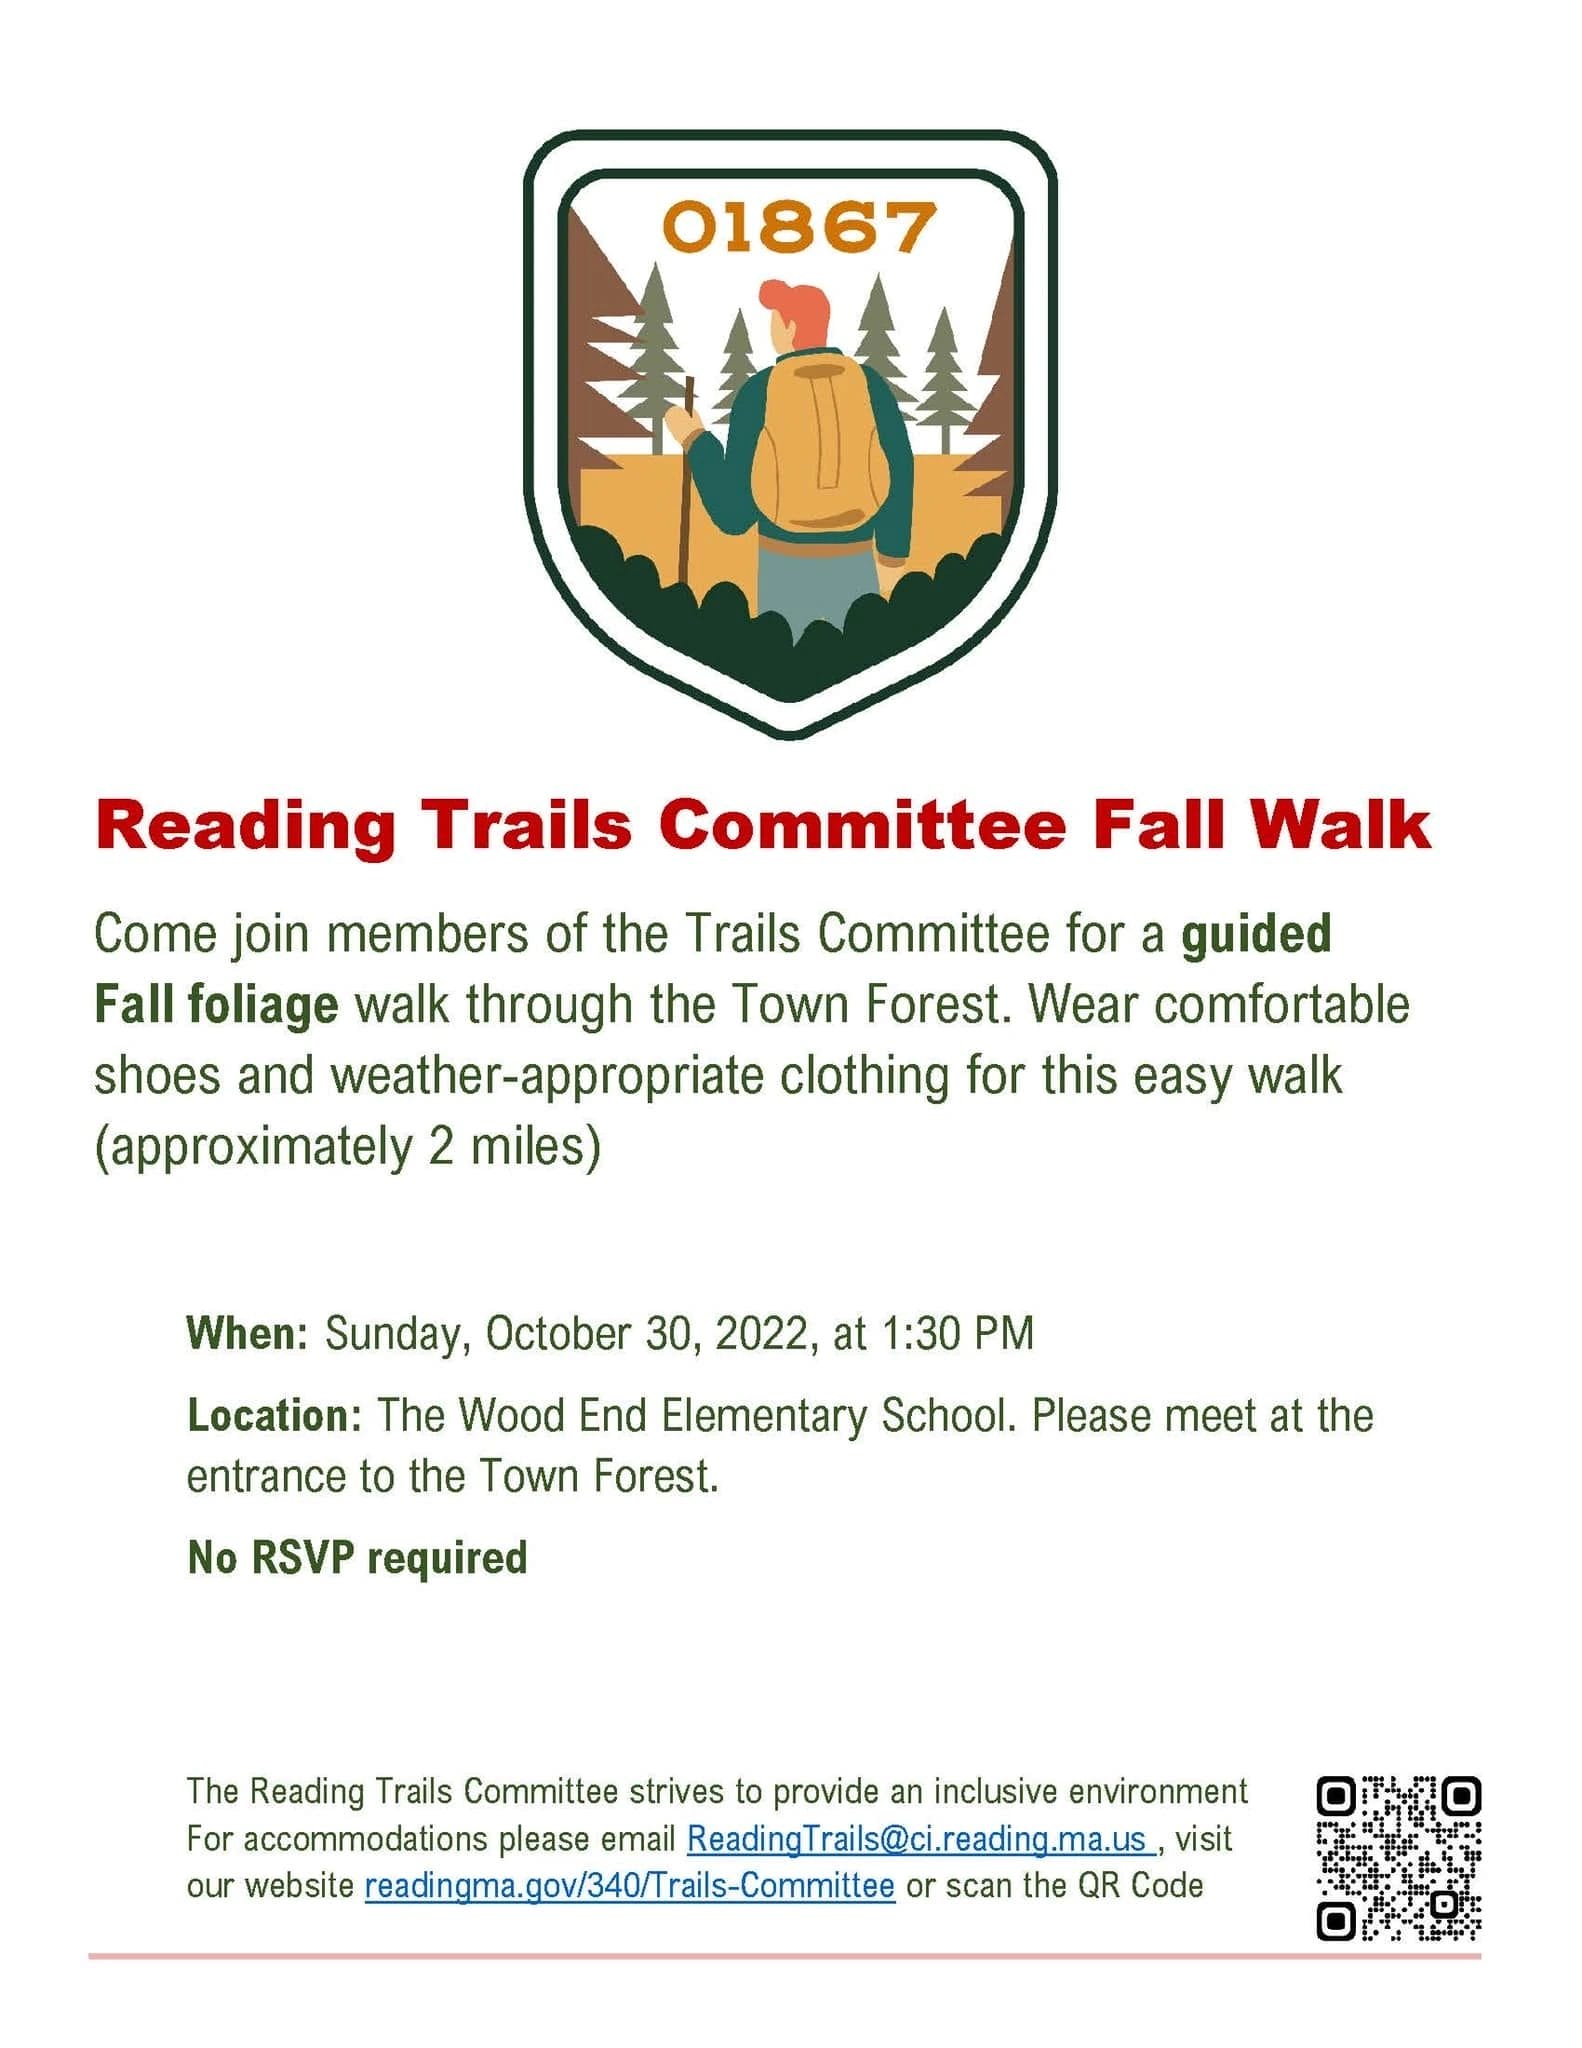 Reading Trails Fall Walk